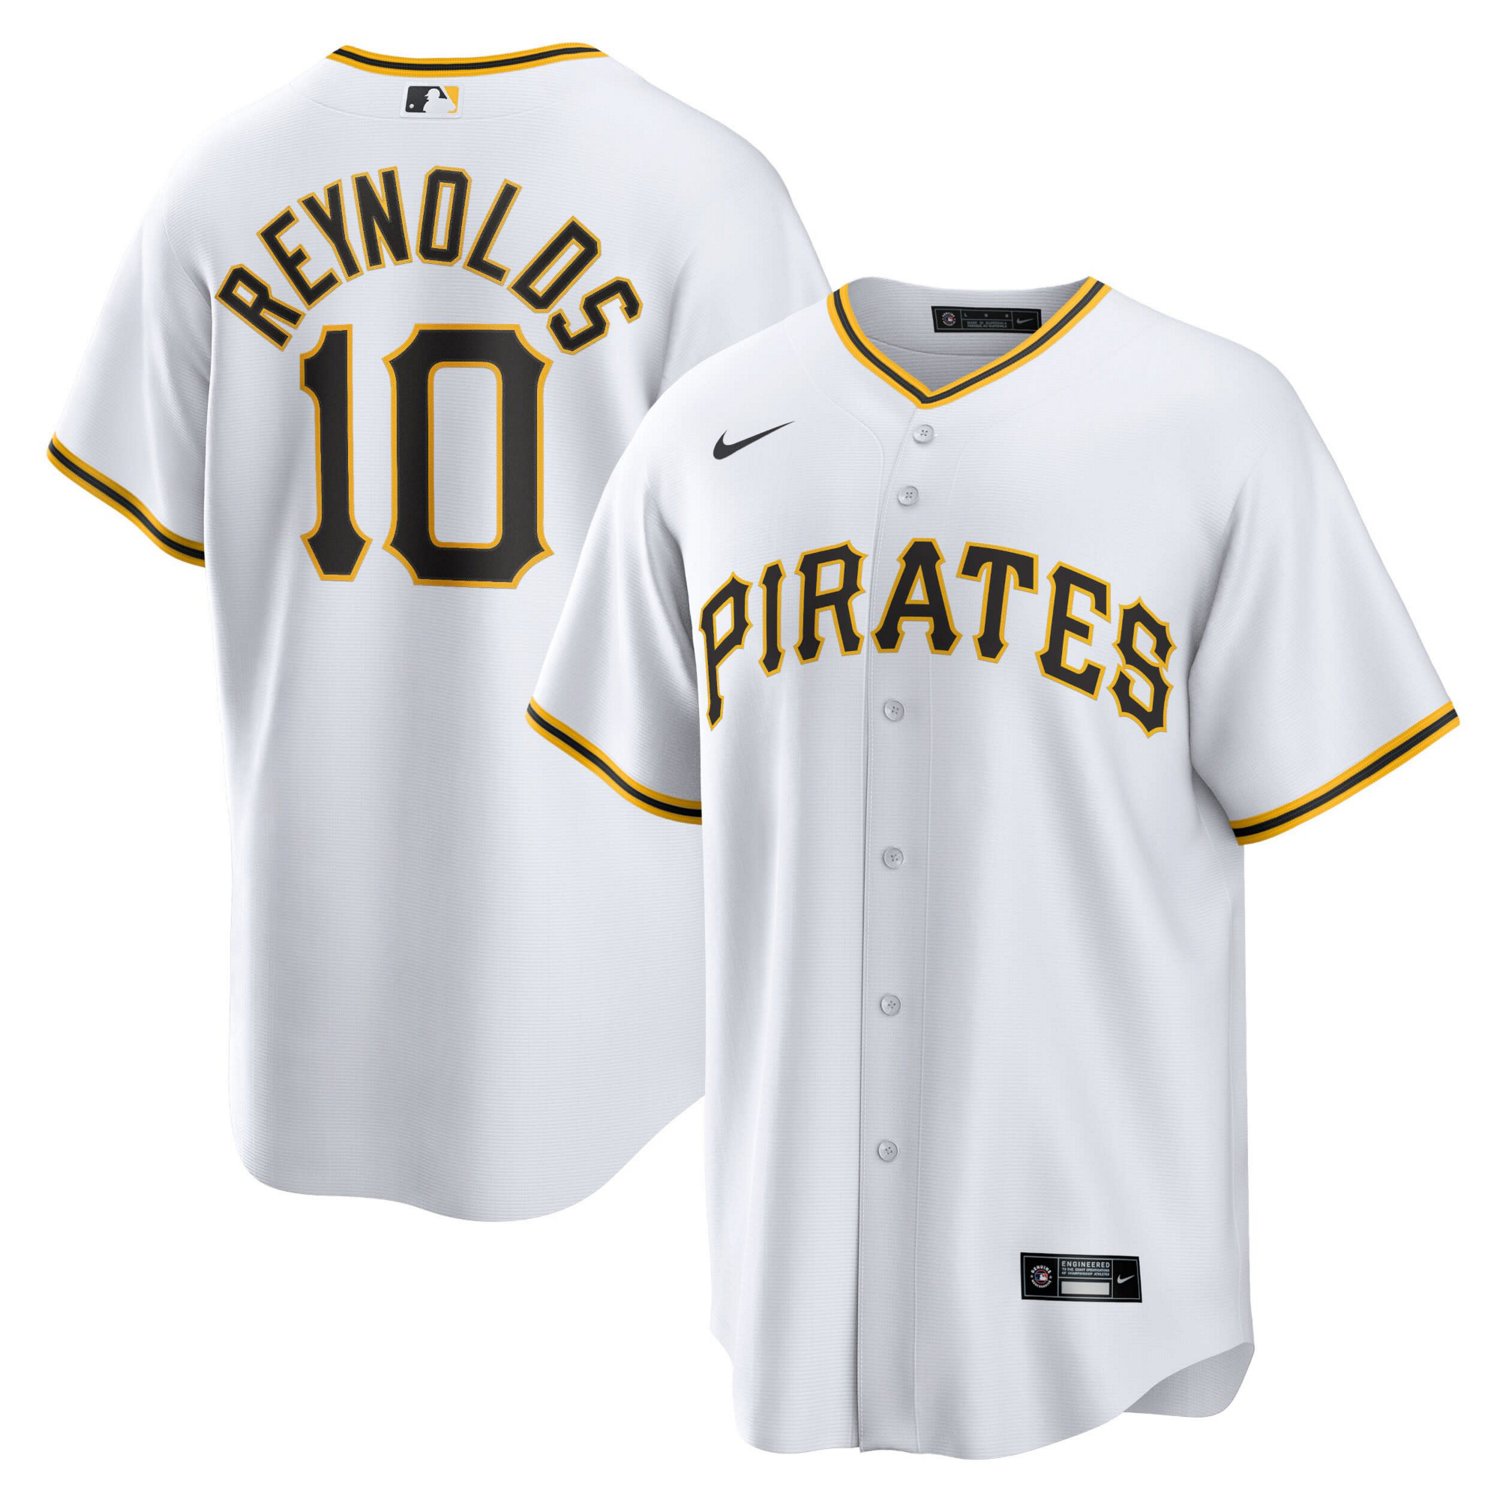 Pittsburgh Pirates gear